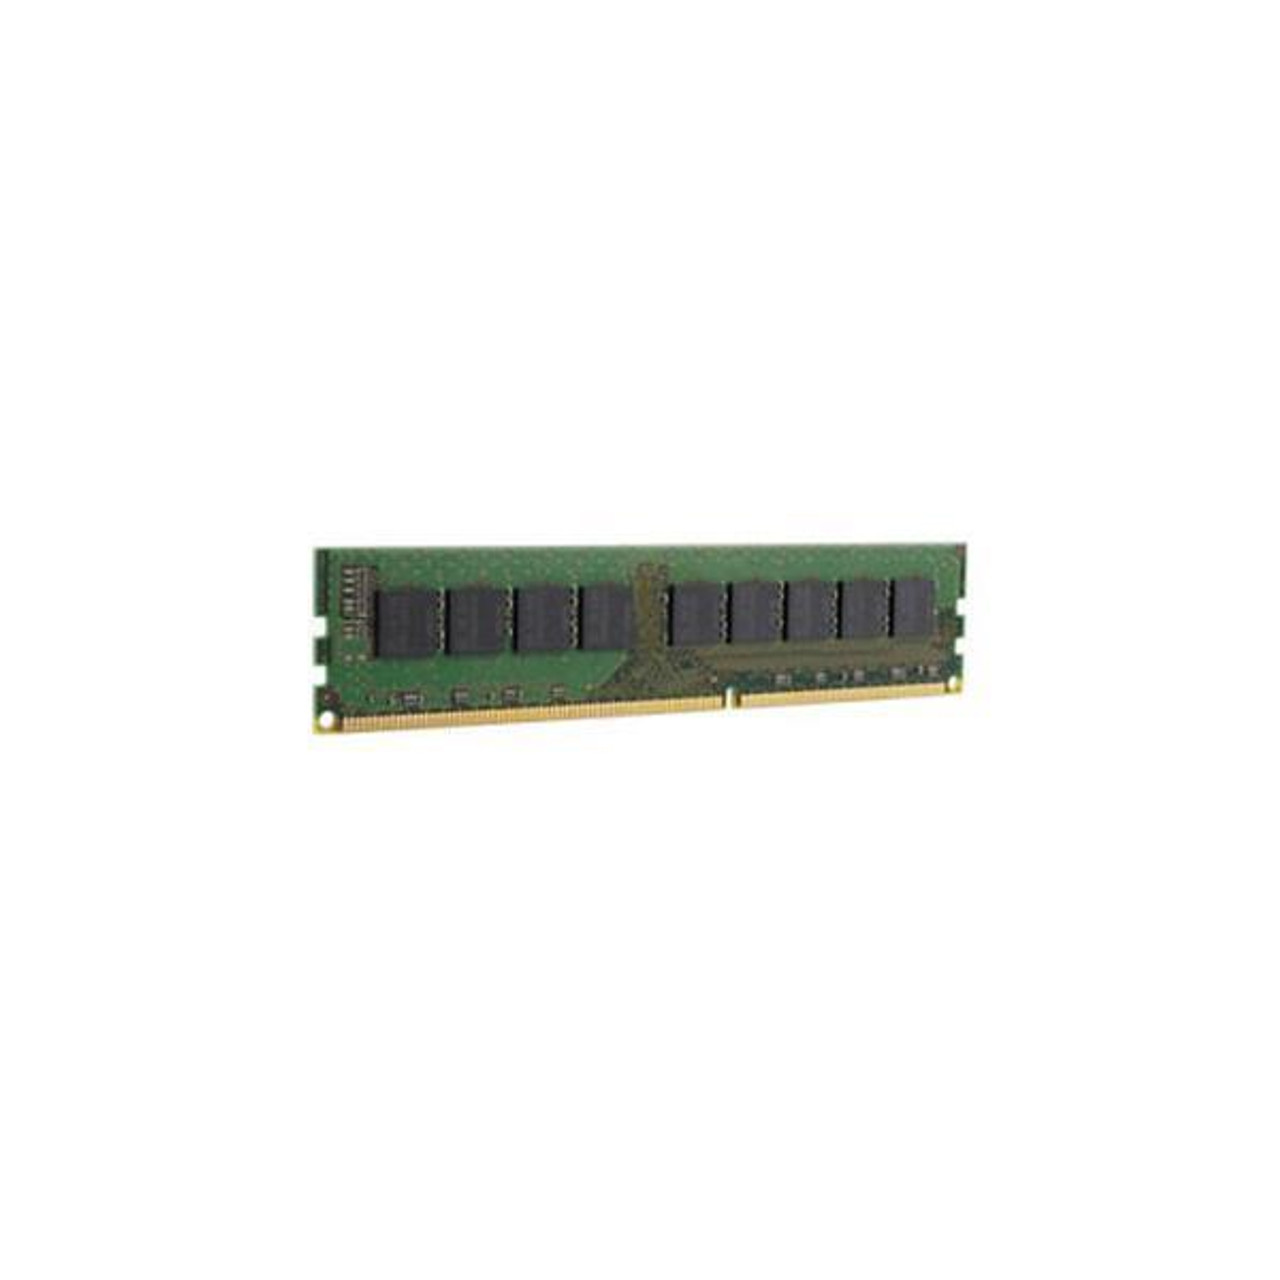 Dataram Corporation Dataram 4GB 2Rx4 DDR3-1333-09-11-E1-D2 240Pin (Gs20X4170-5C)